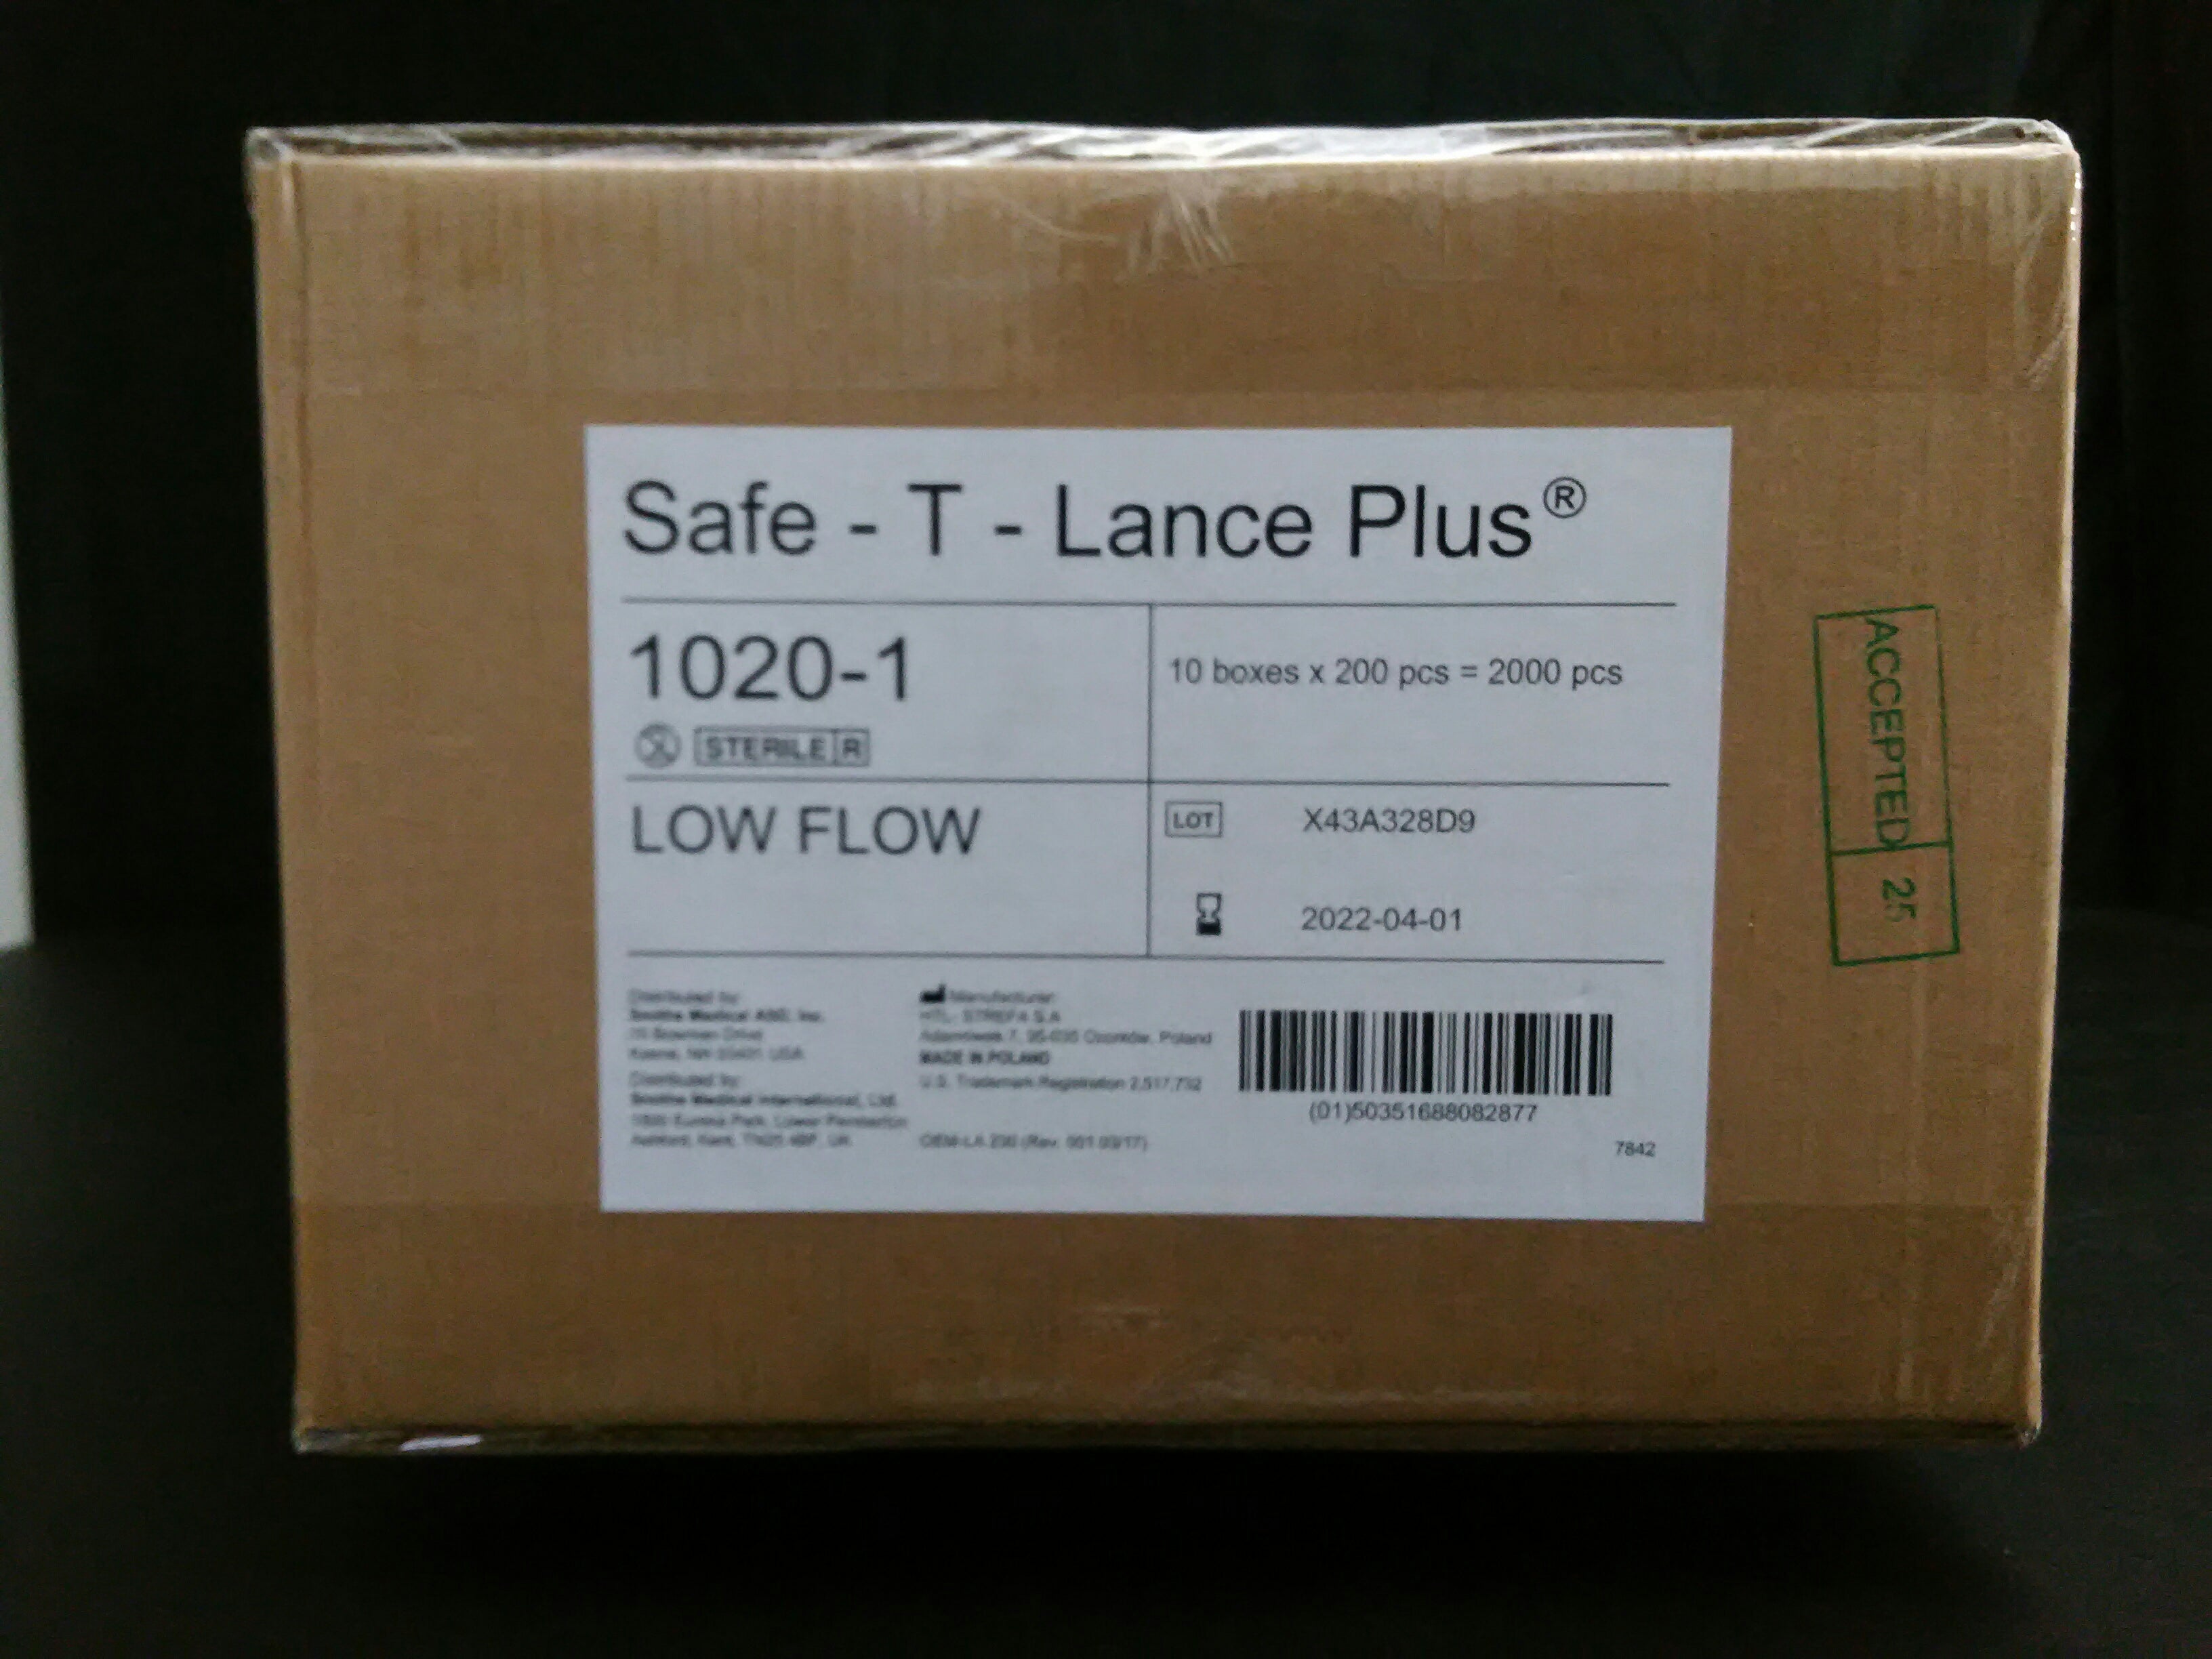 SMITHS MEDICAL / JELCO 1020-1 LANCET SAF-T-LANCE+ LOW FLOW 25G BLU (200/BX 10BX/CS)